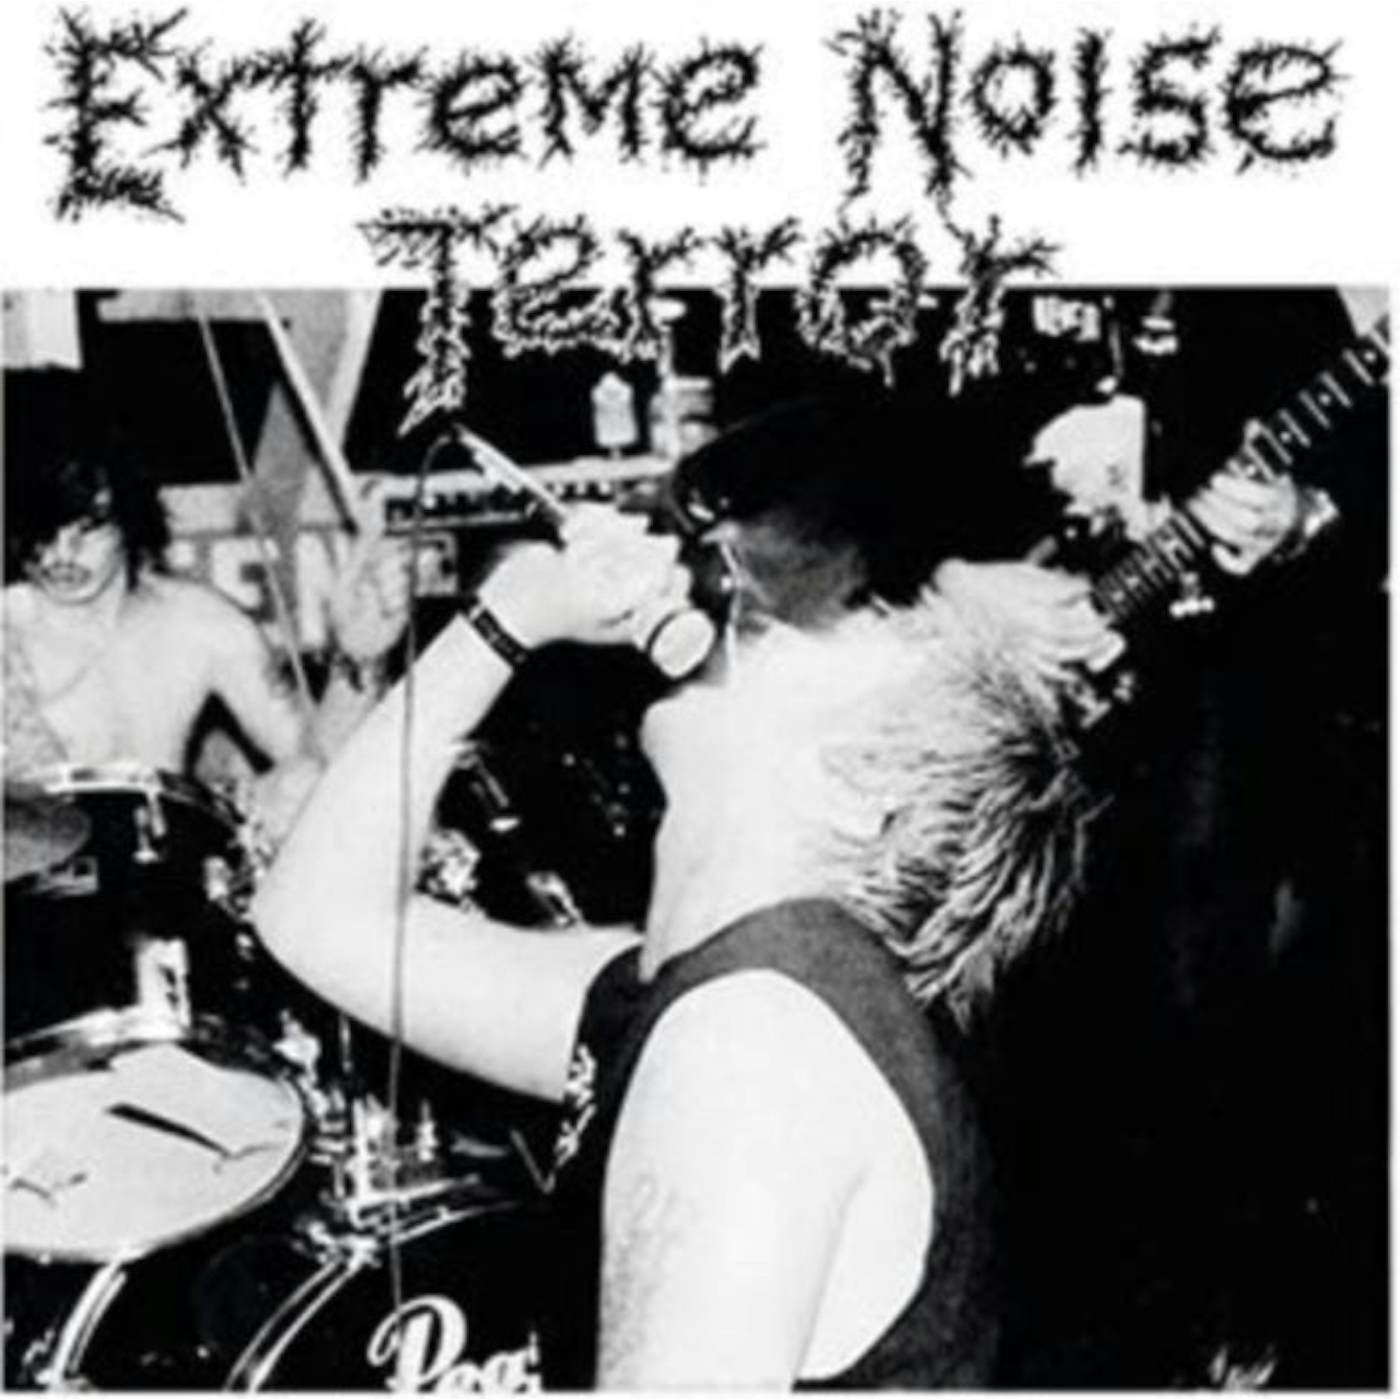 Extreme Noise Terror LP - Burladingen 1988 (Red Vinyl)